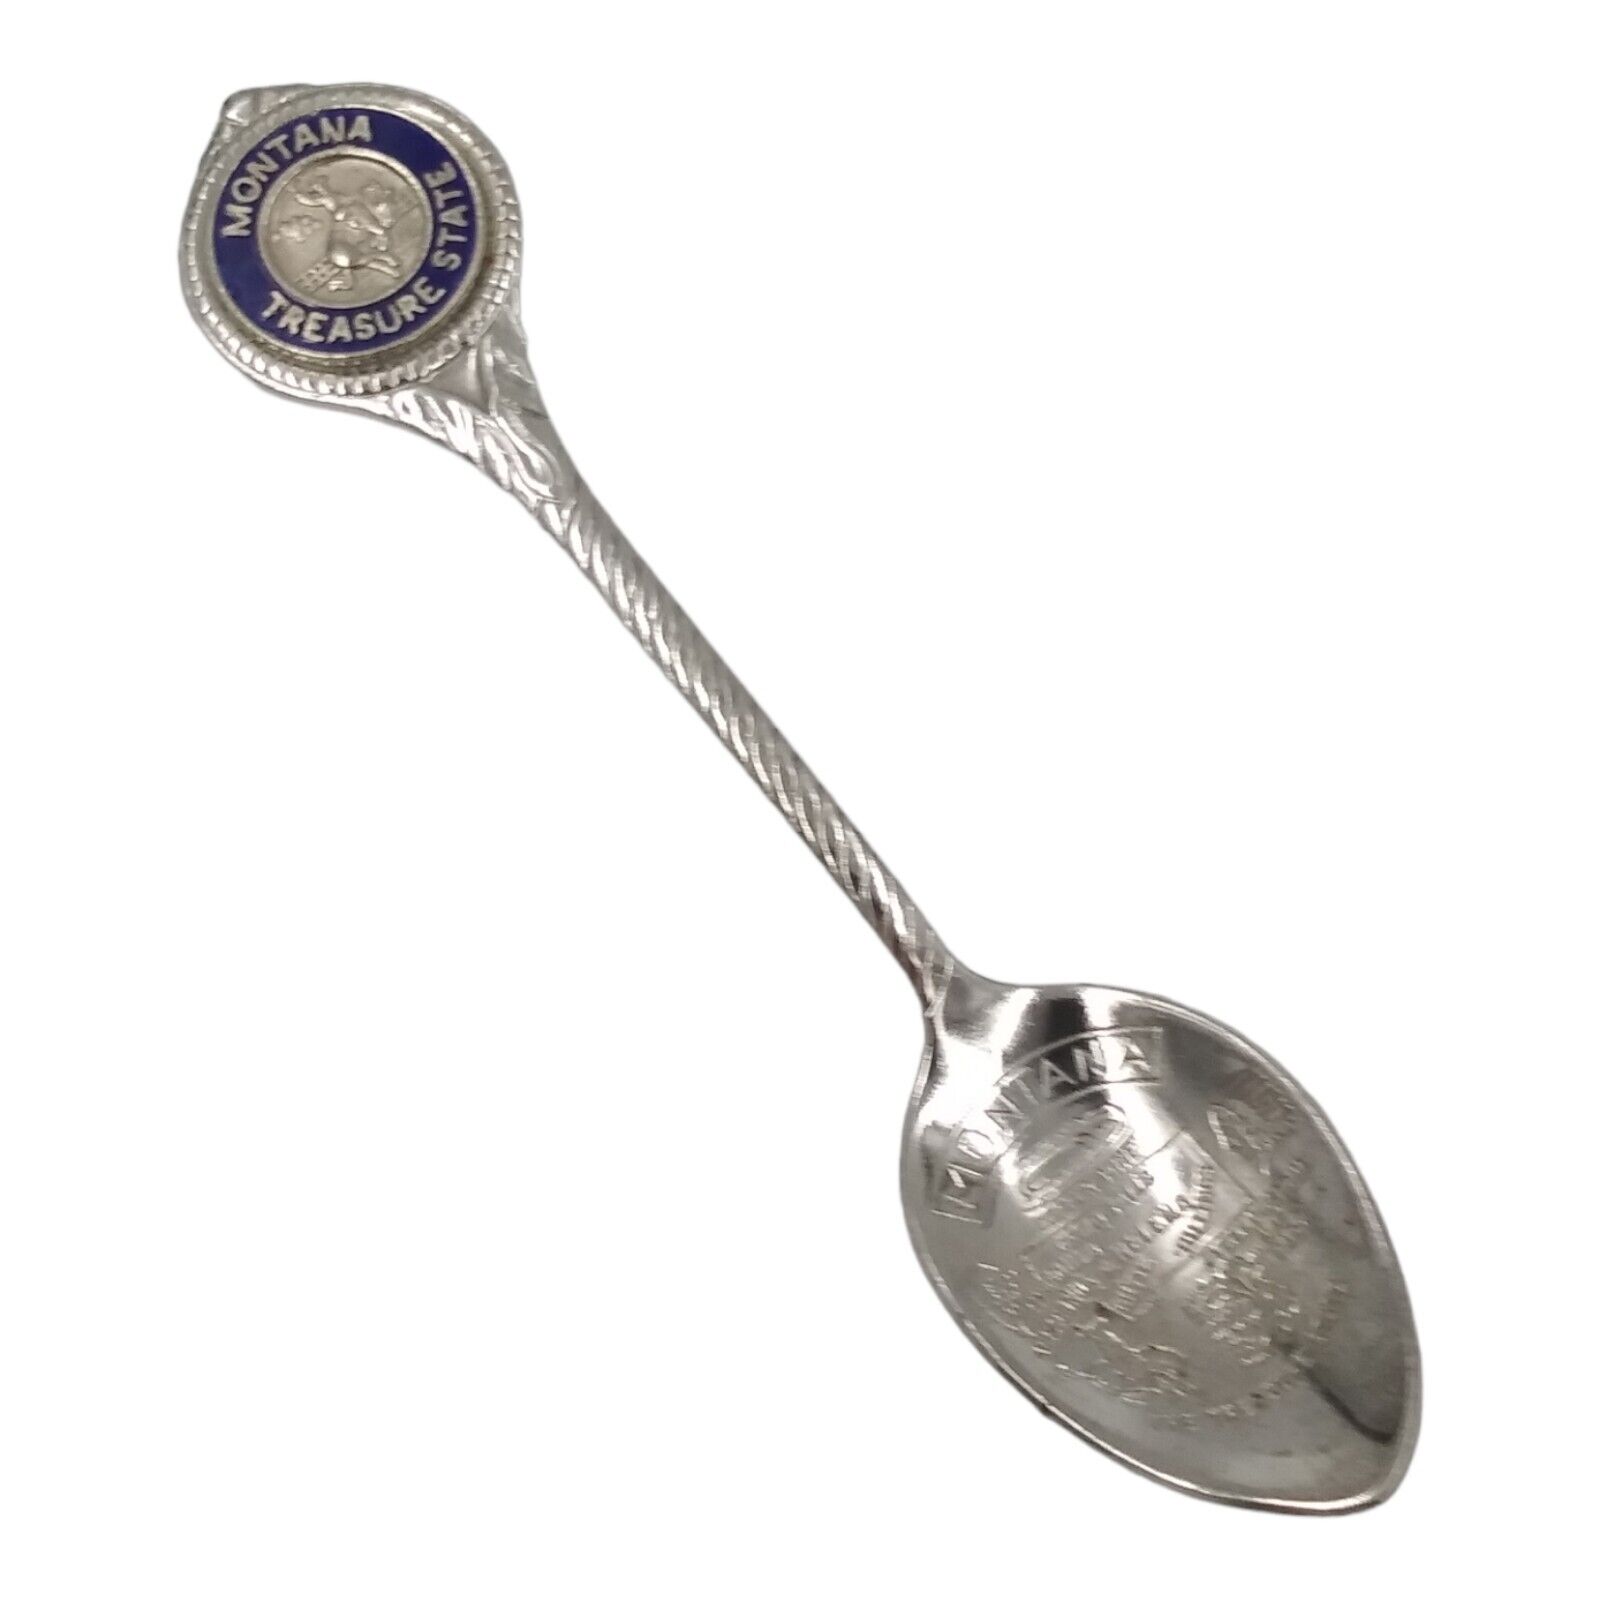 Vintage Montana Souvenir Spoon US Collectible Treasure State